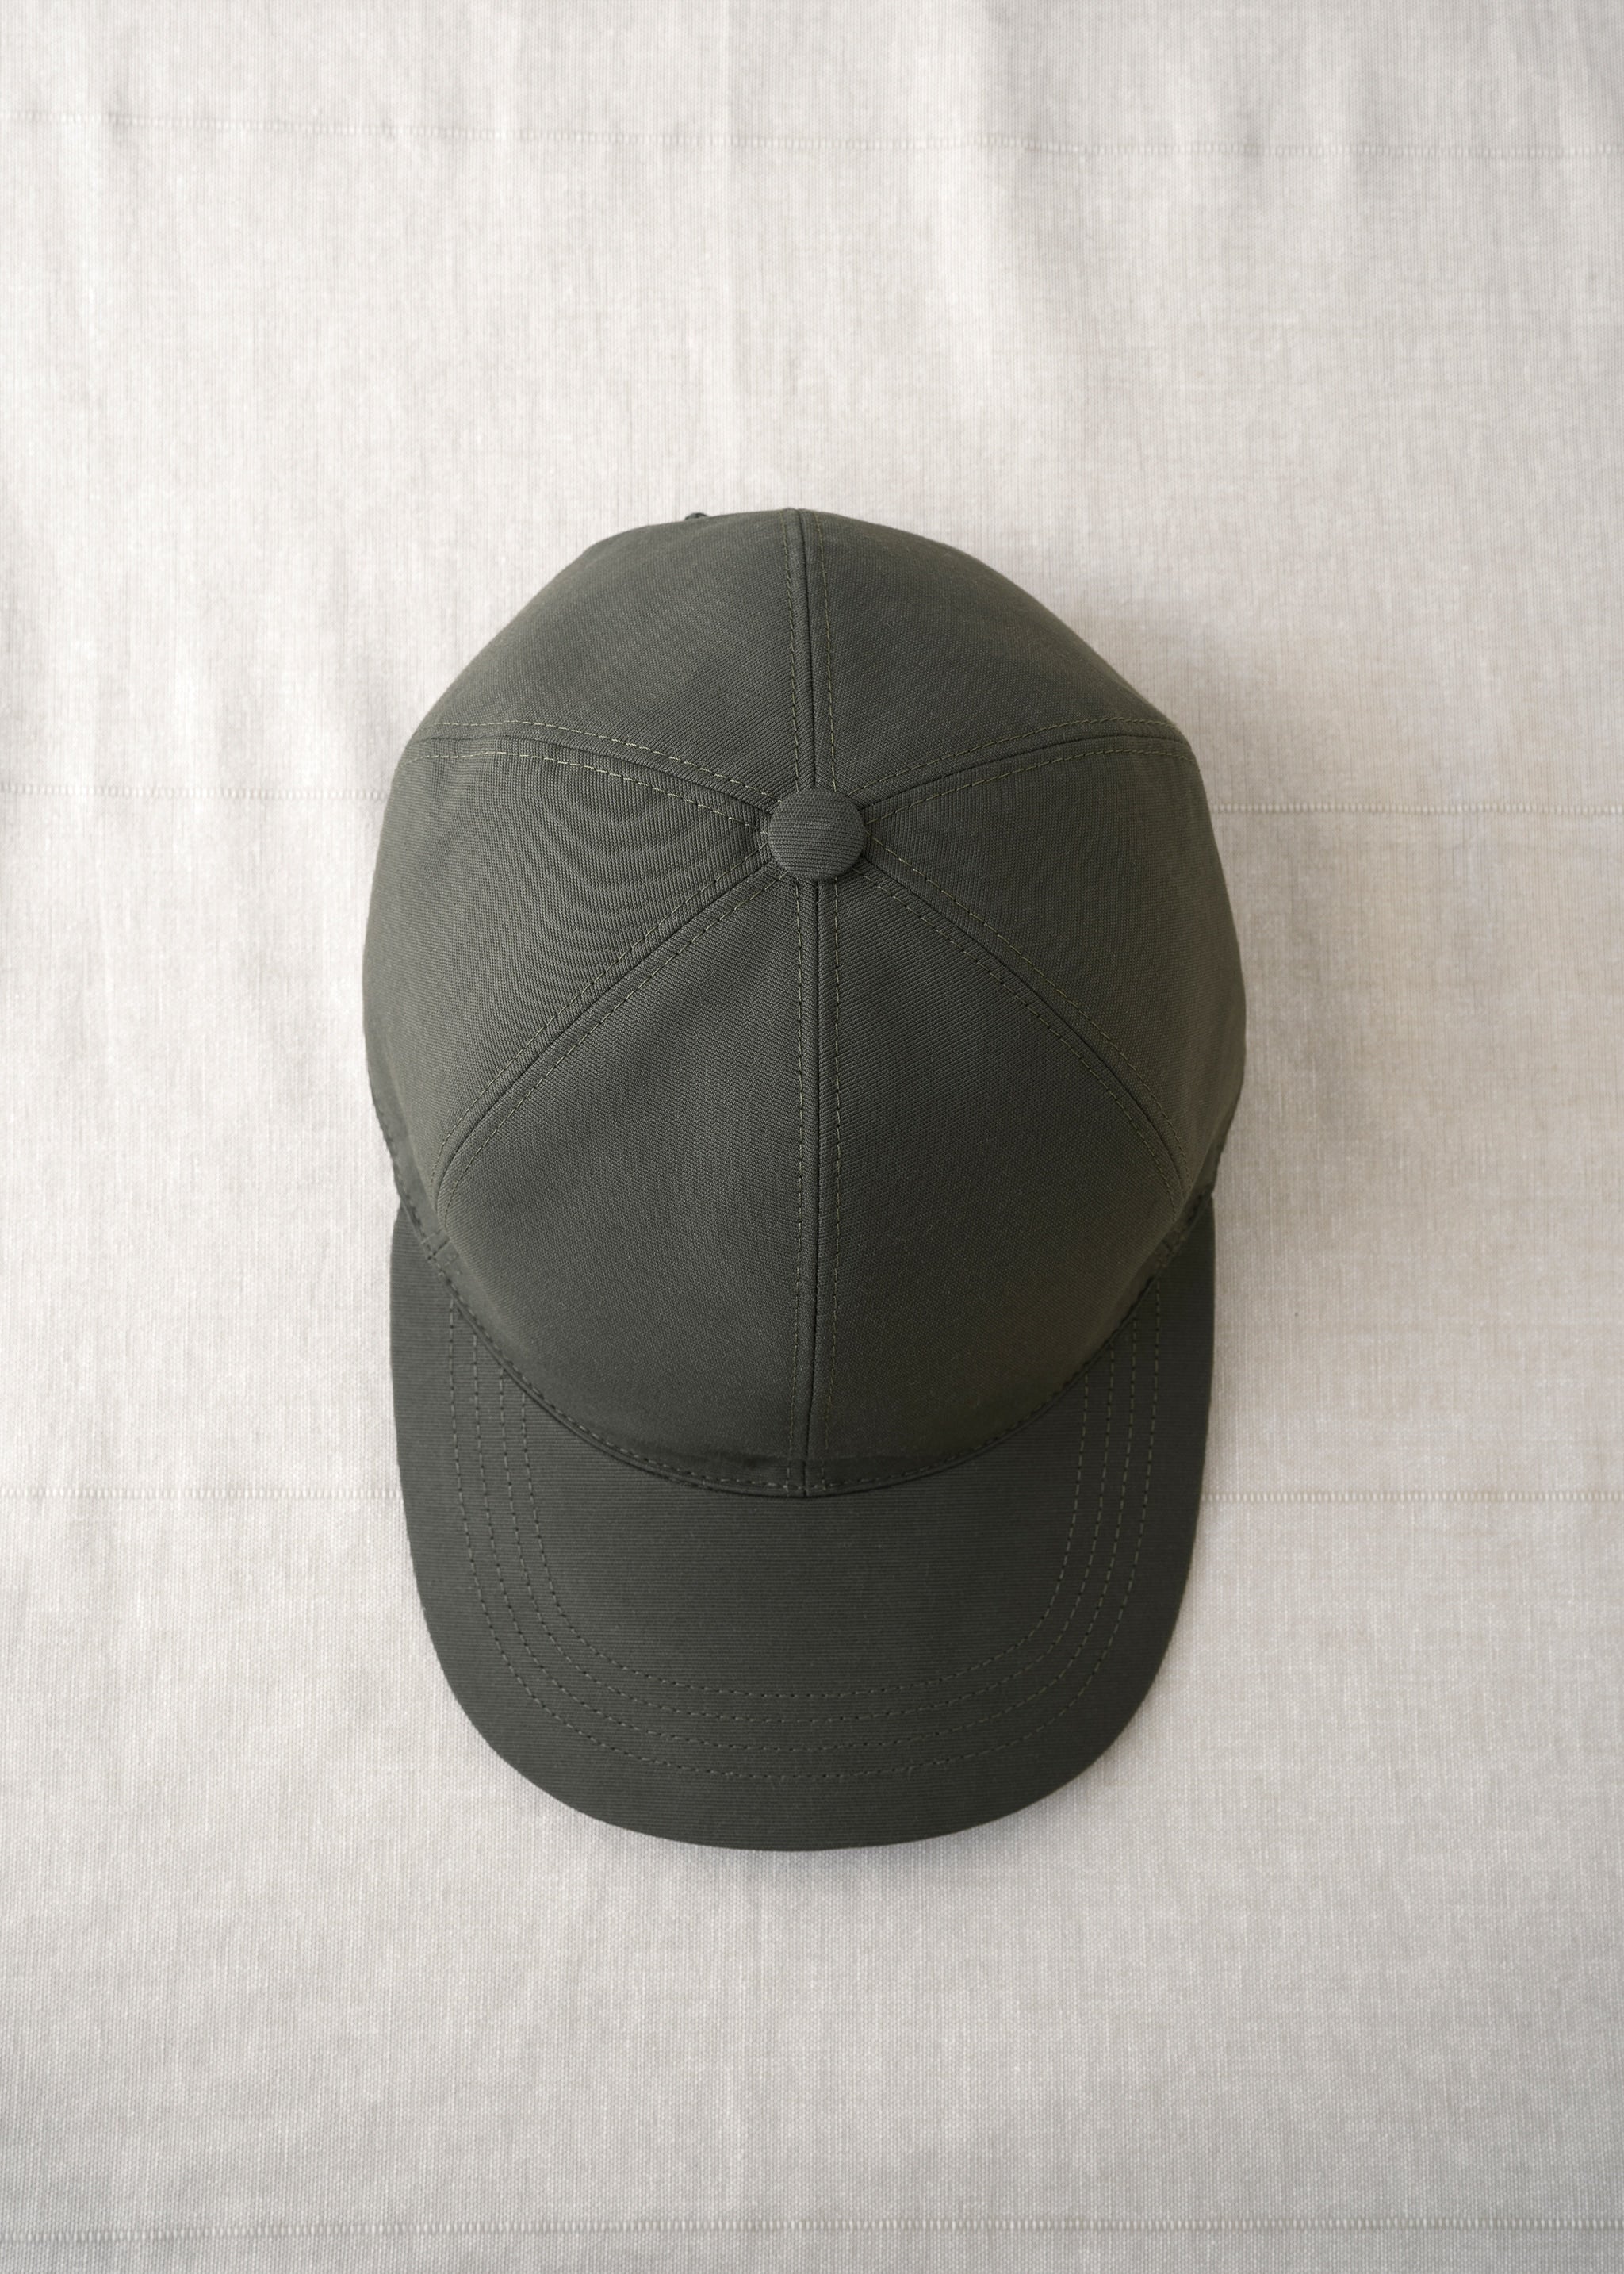 Y-0001 Baseball Cap - Olive (Cotton blend)